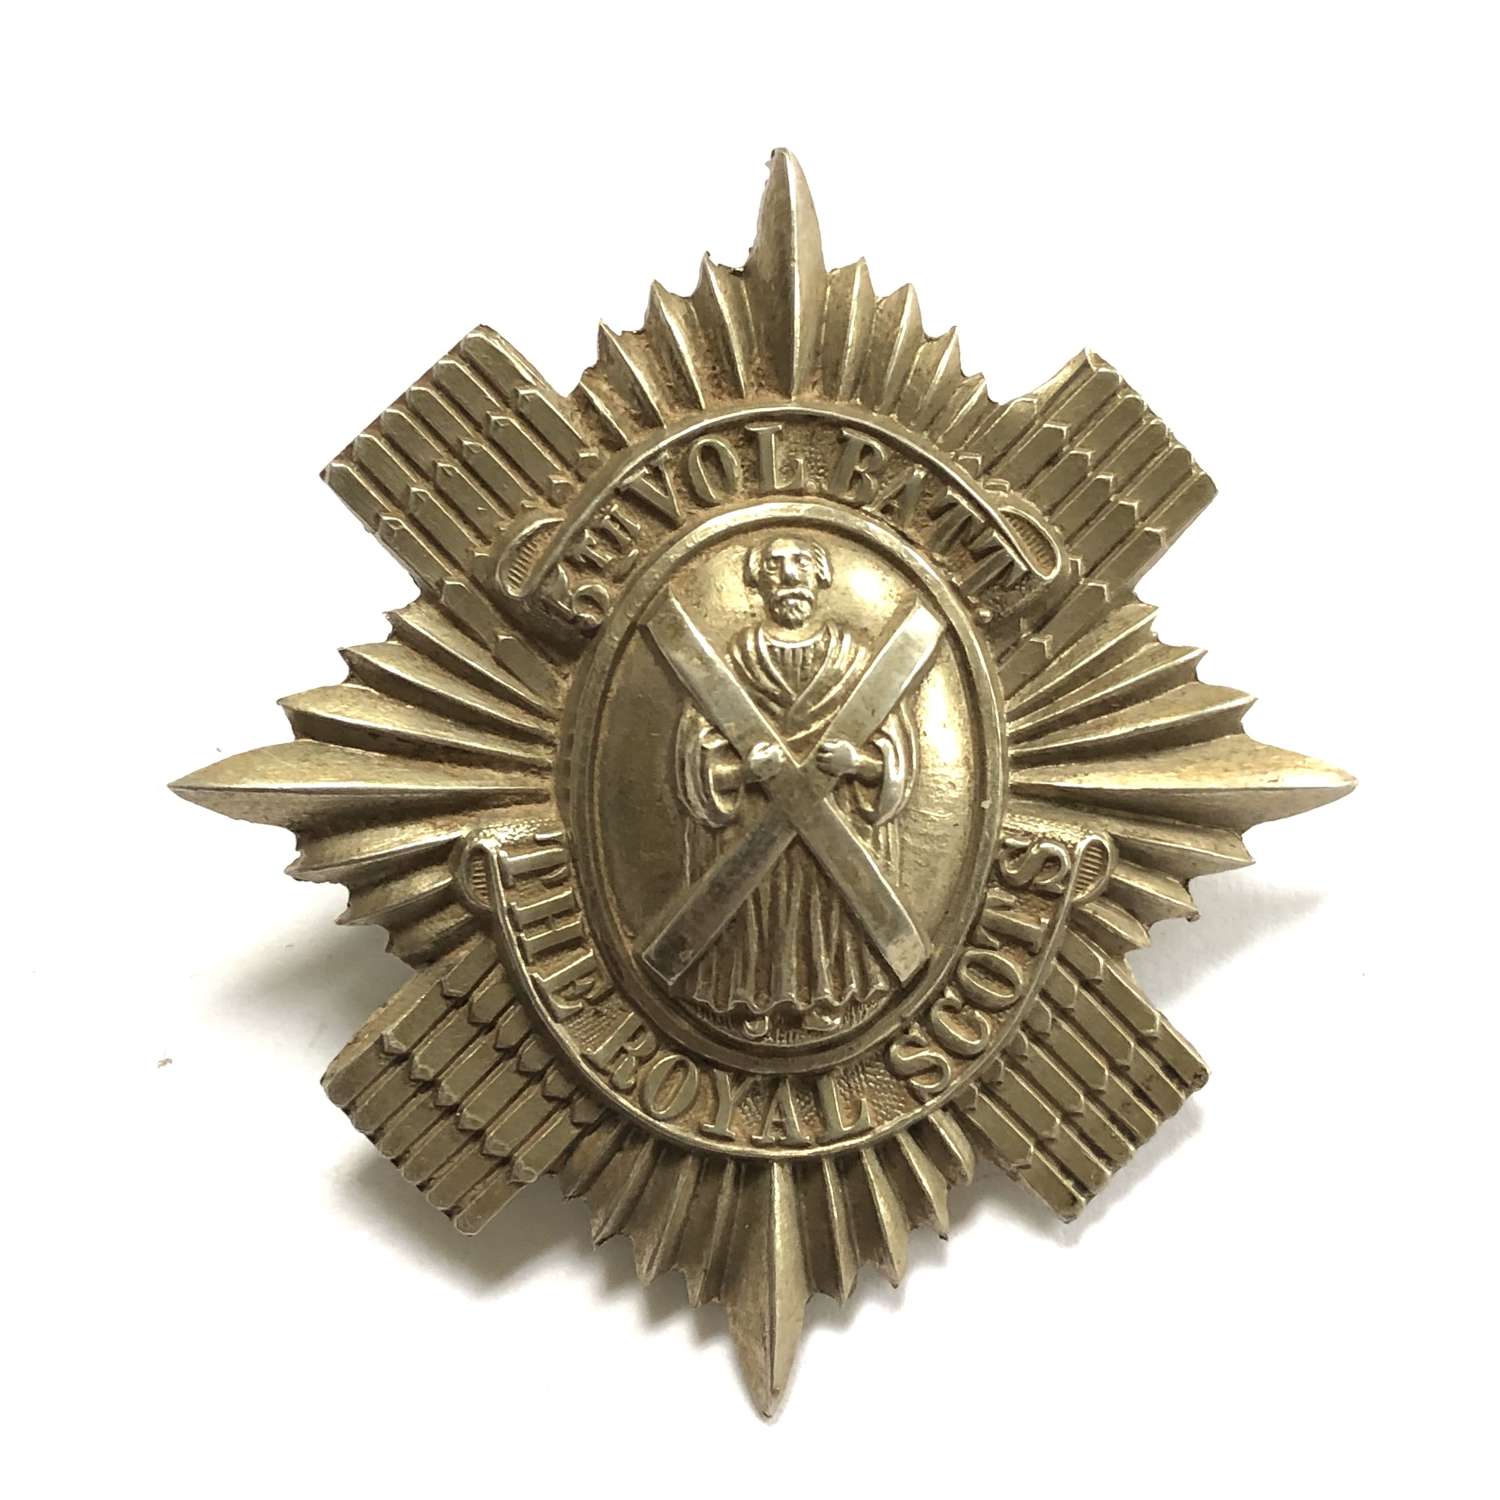 Scottish. 5th VB Royal Scots glengarry badge circa 1888-1908